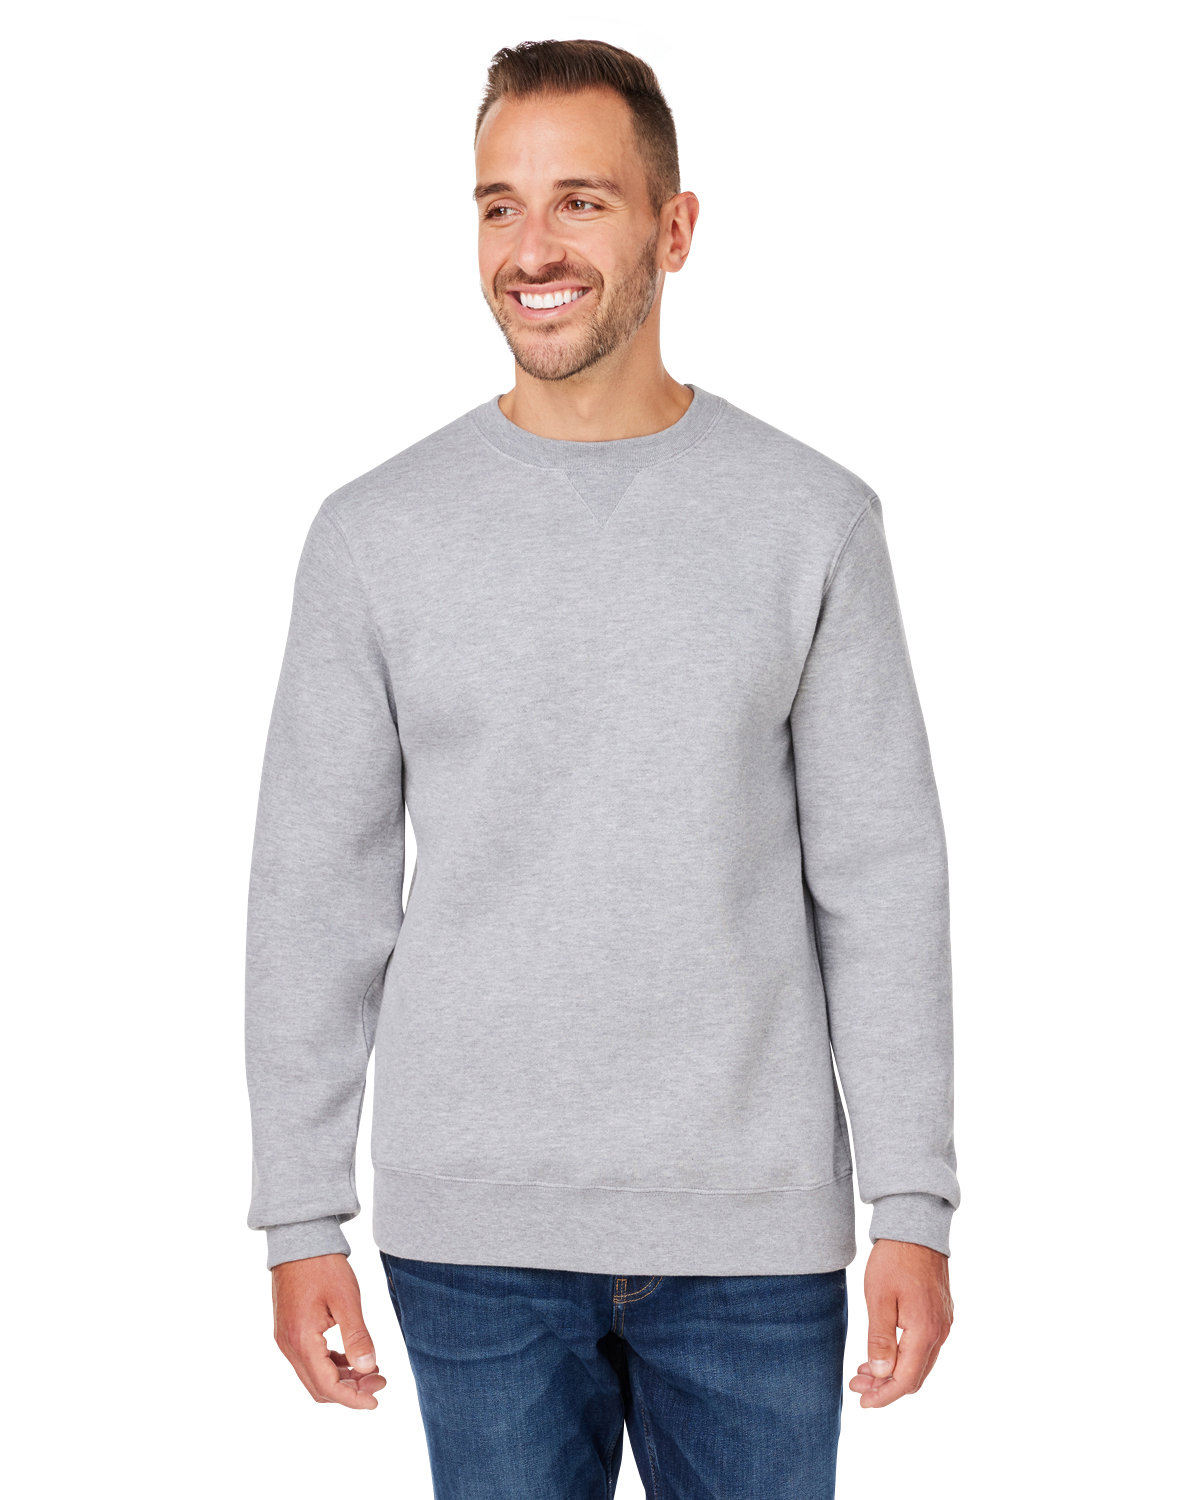 J. America 8424 - Unisex Premium Fleece Sweatshirt